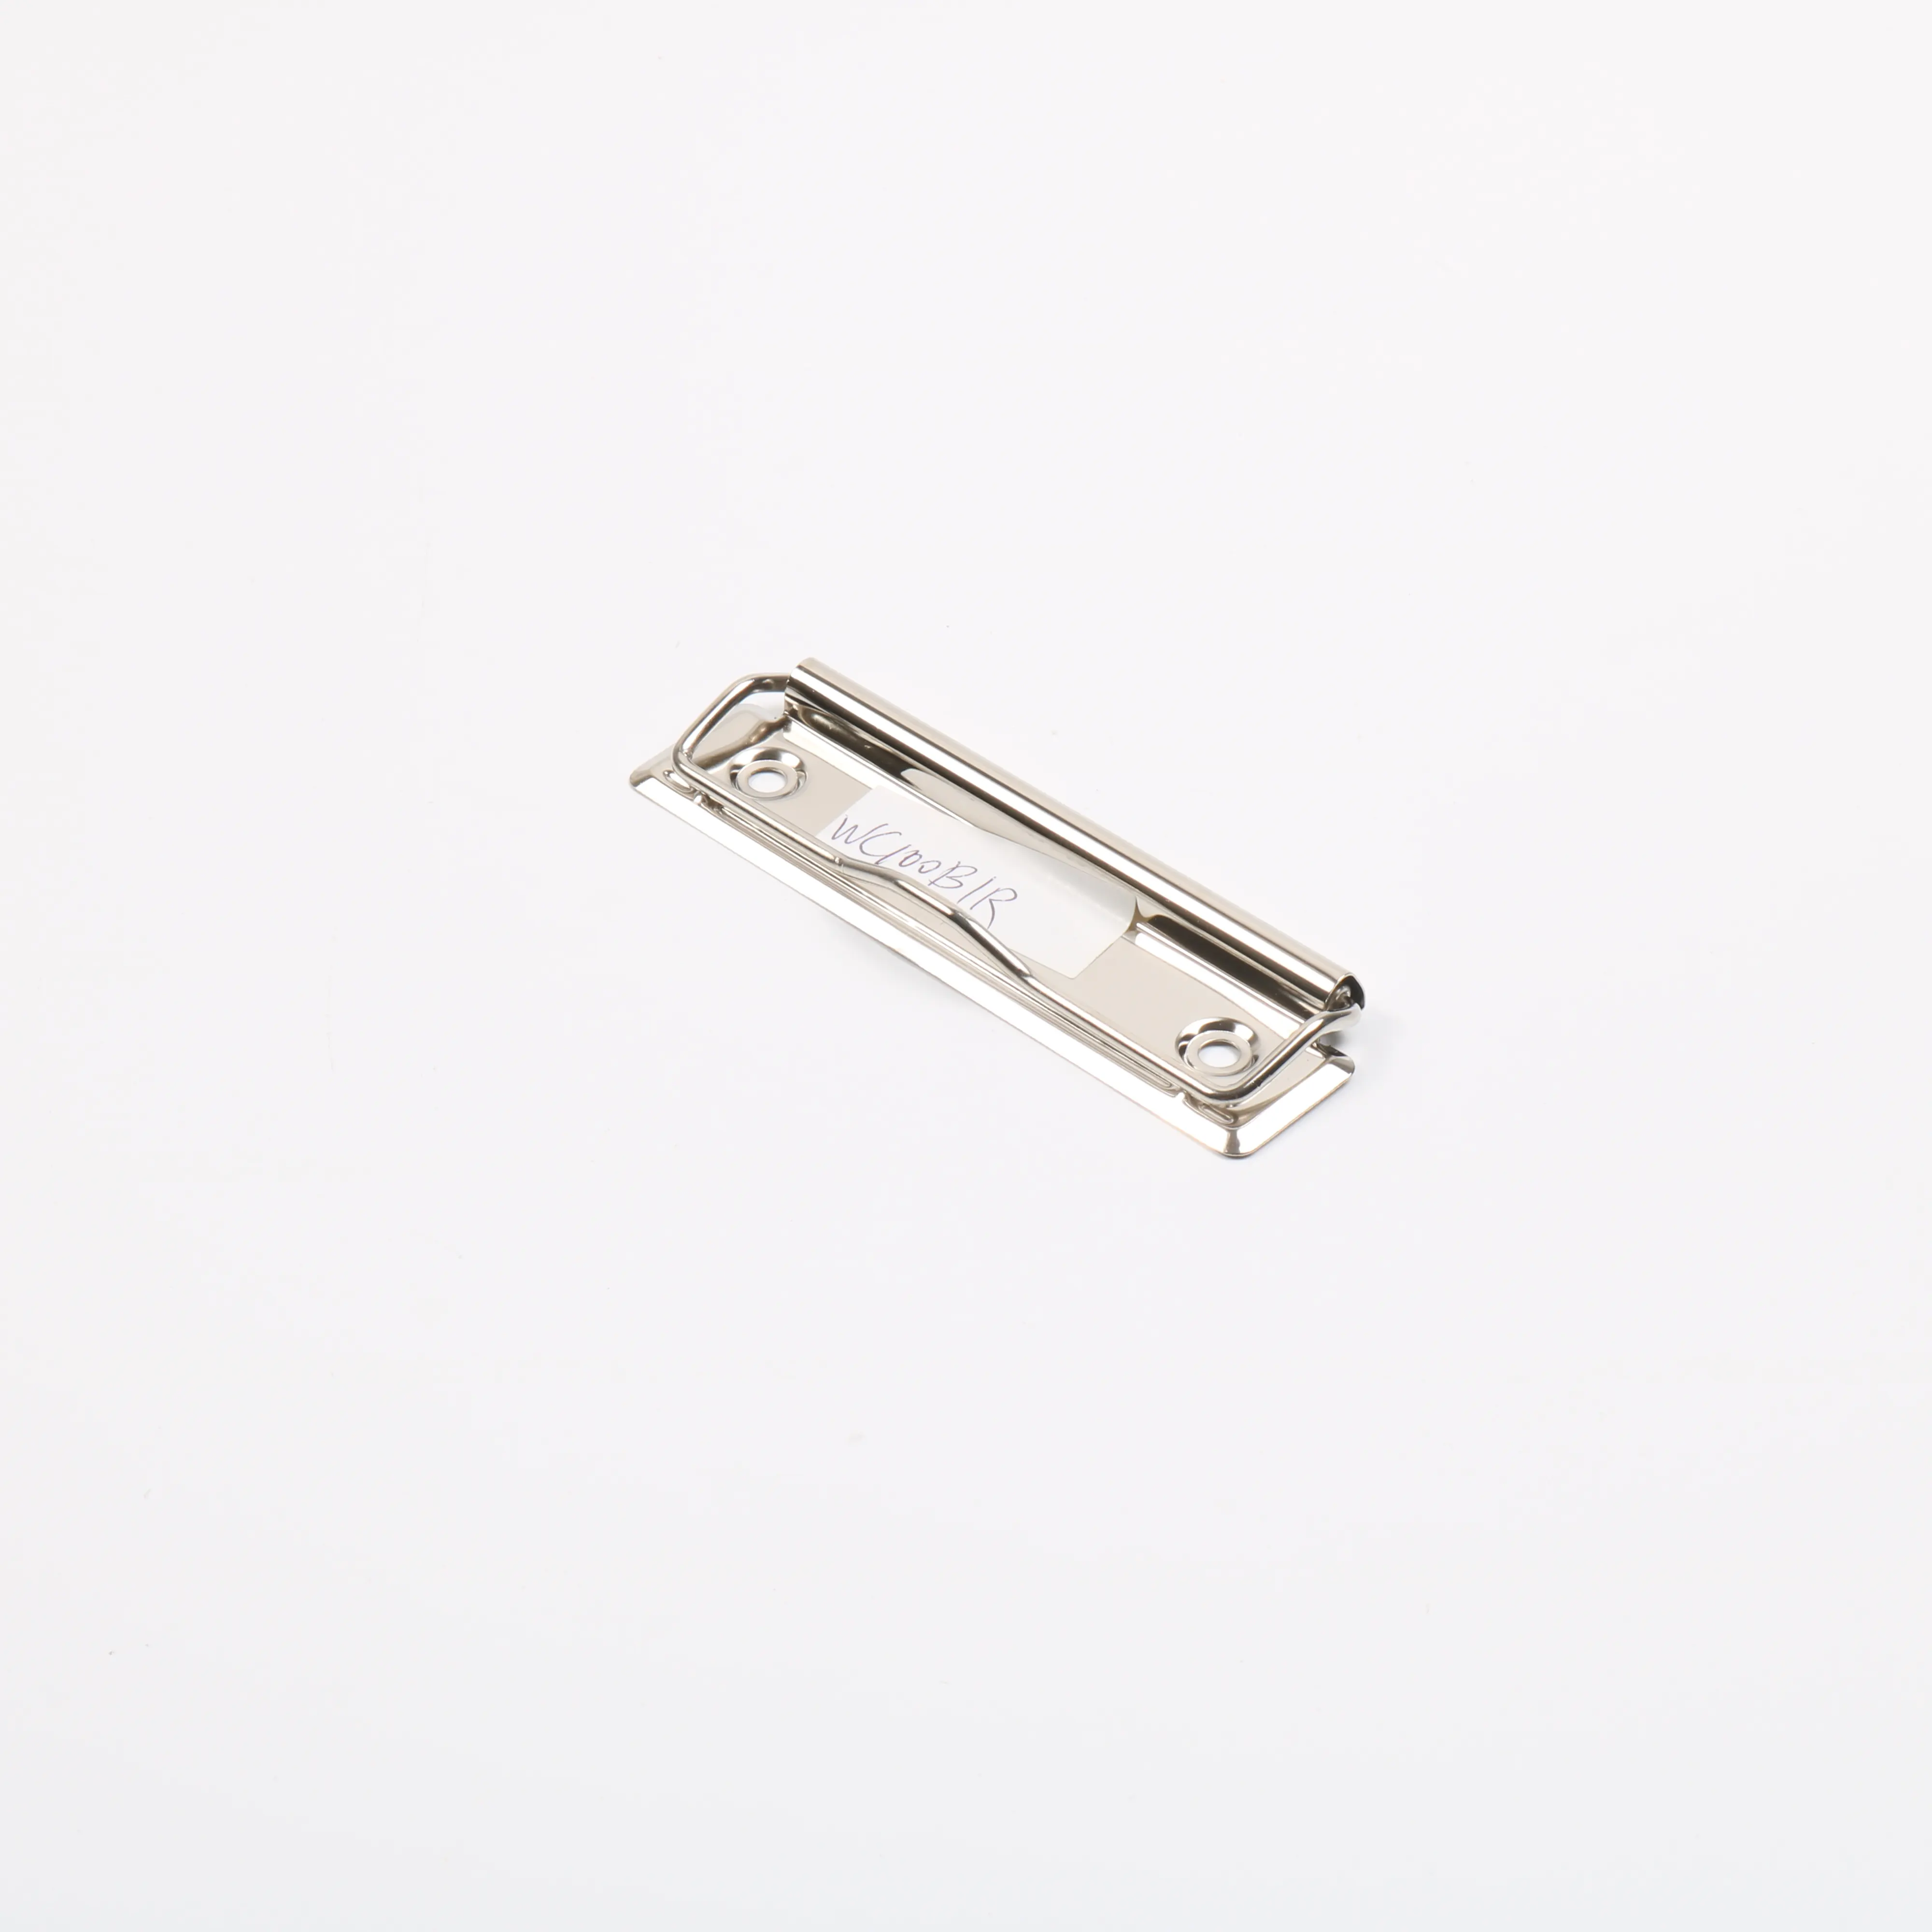 Wholesale Clipboard Menu Board Clip/metal clip for A4 paper